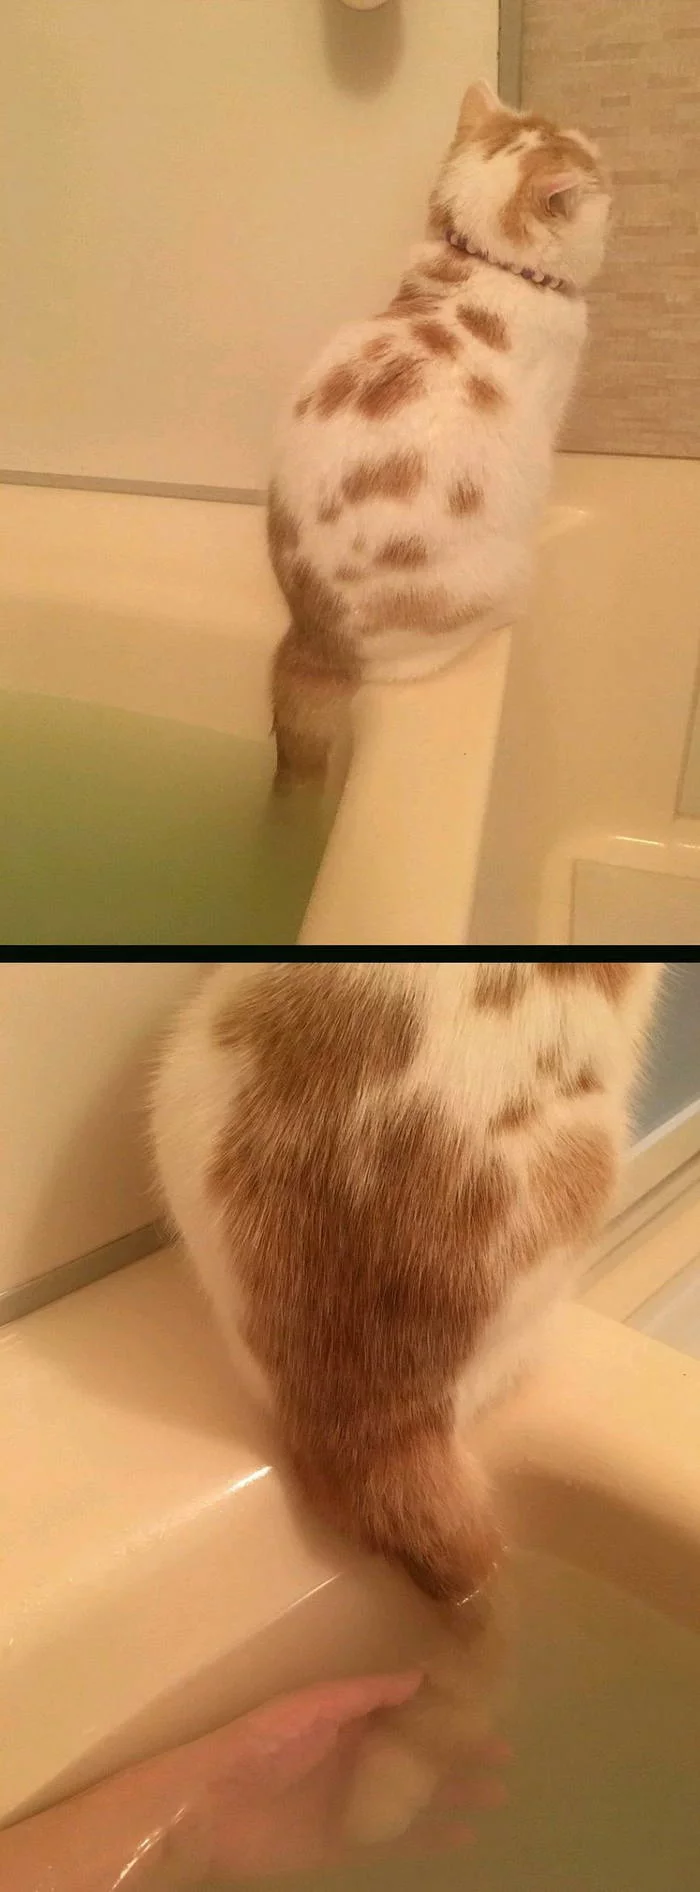 O! - cat, Tail, Bath, Water procedures, Longpost